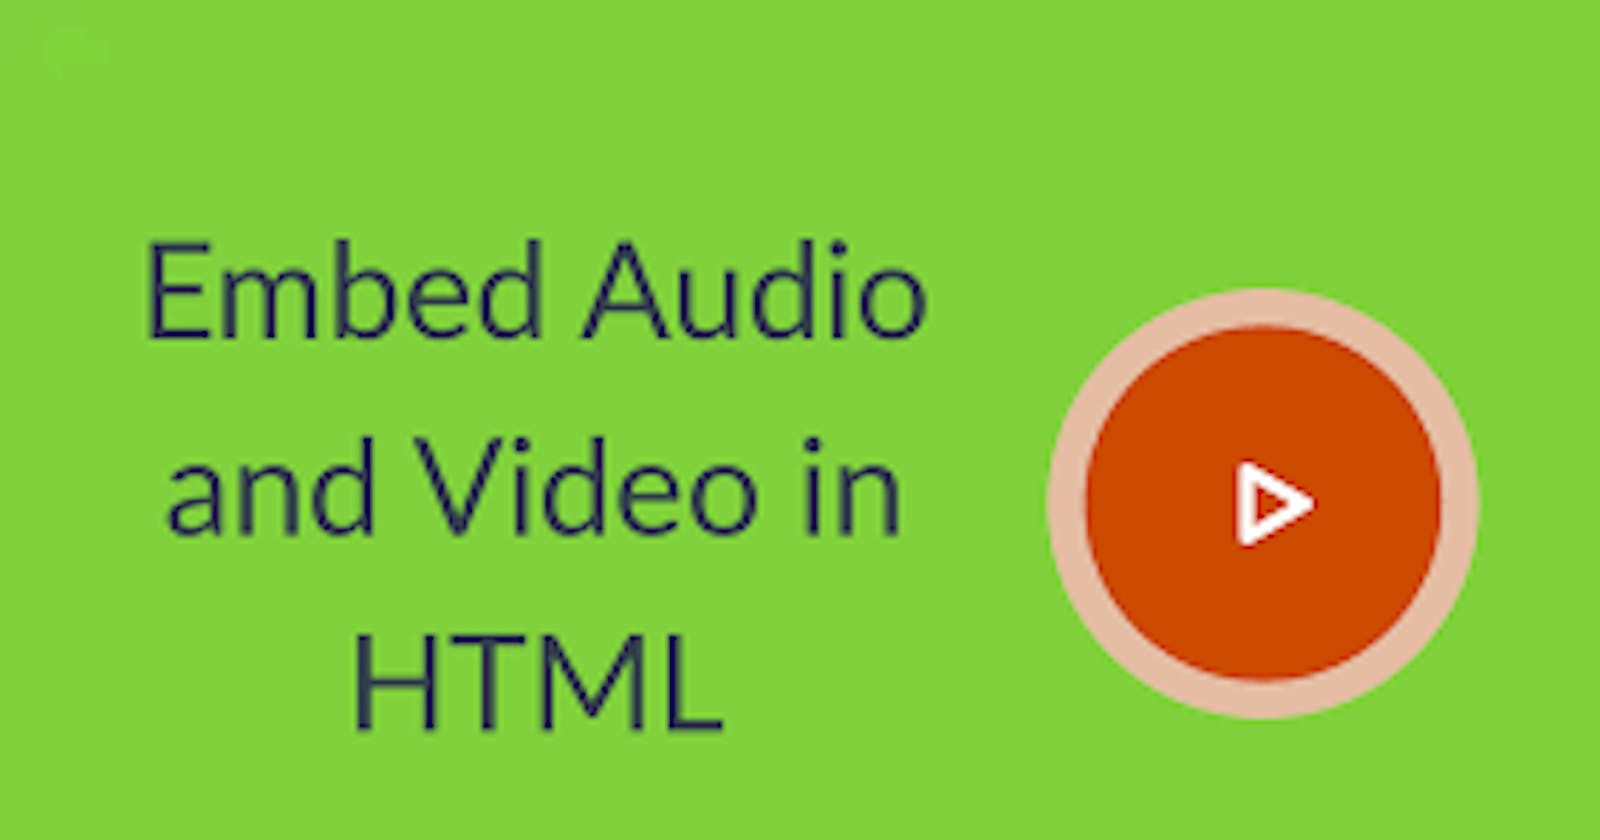 Audio & Video HTML Element